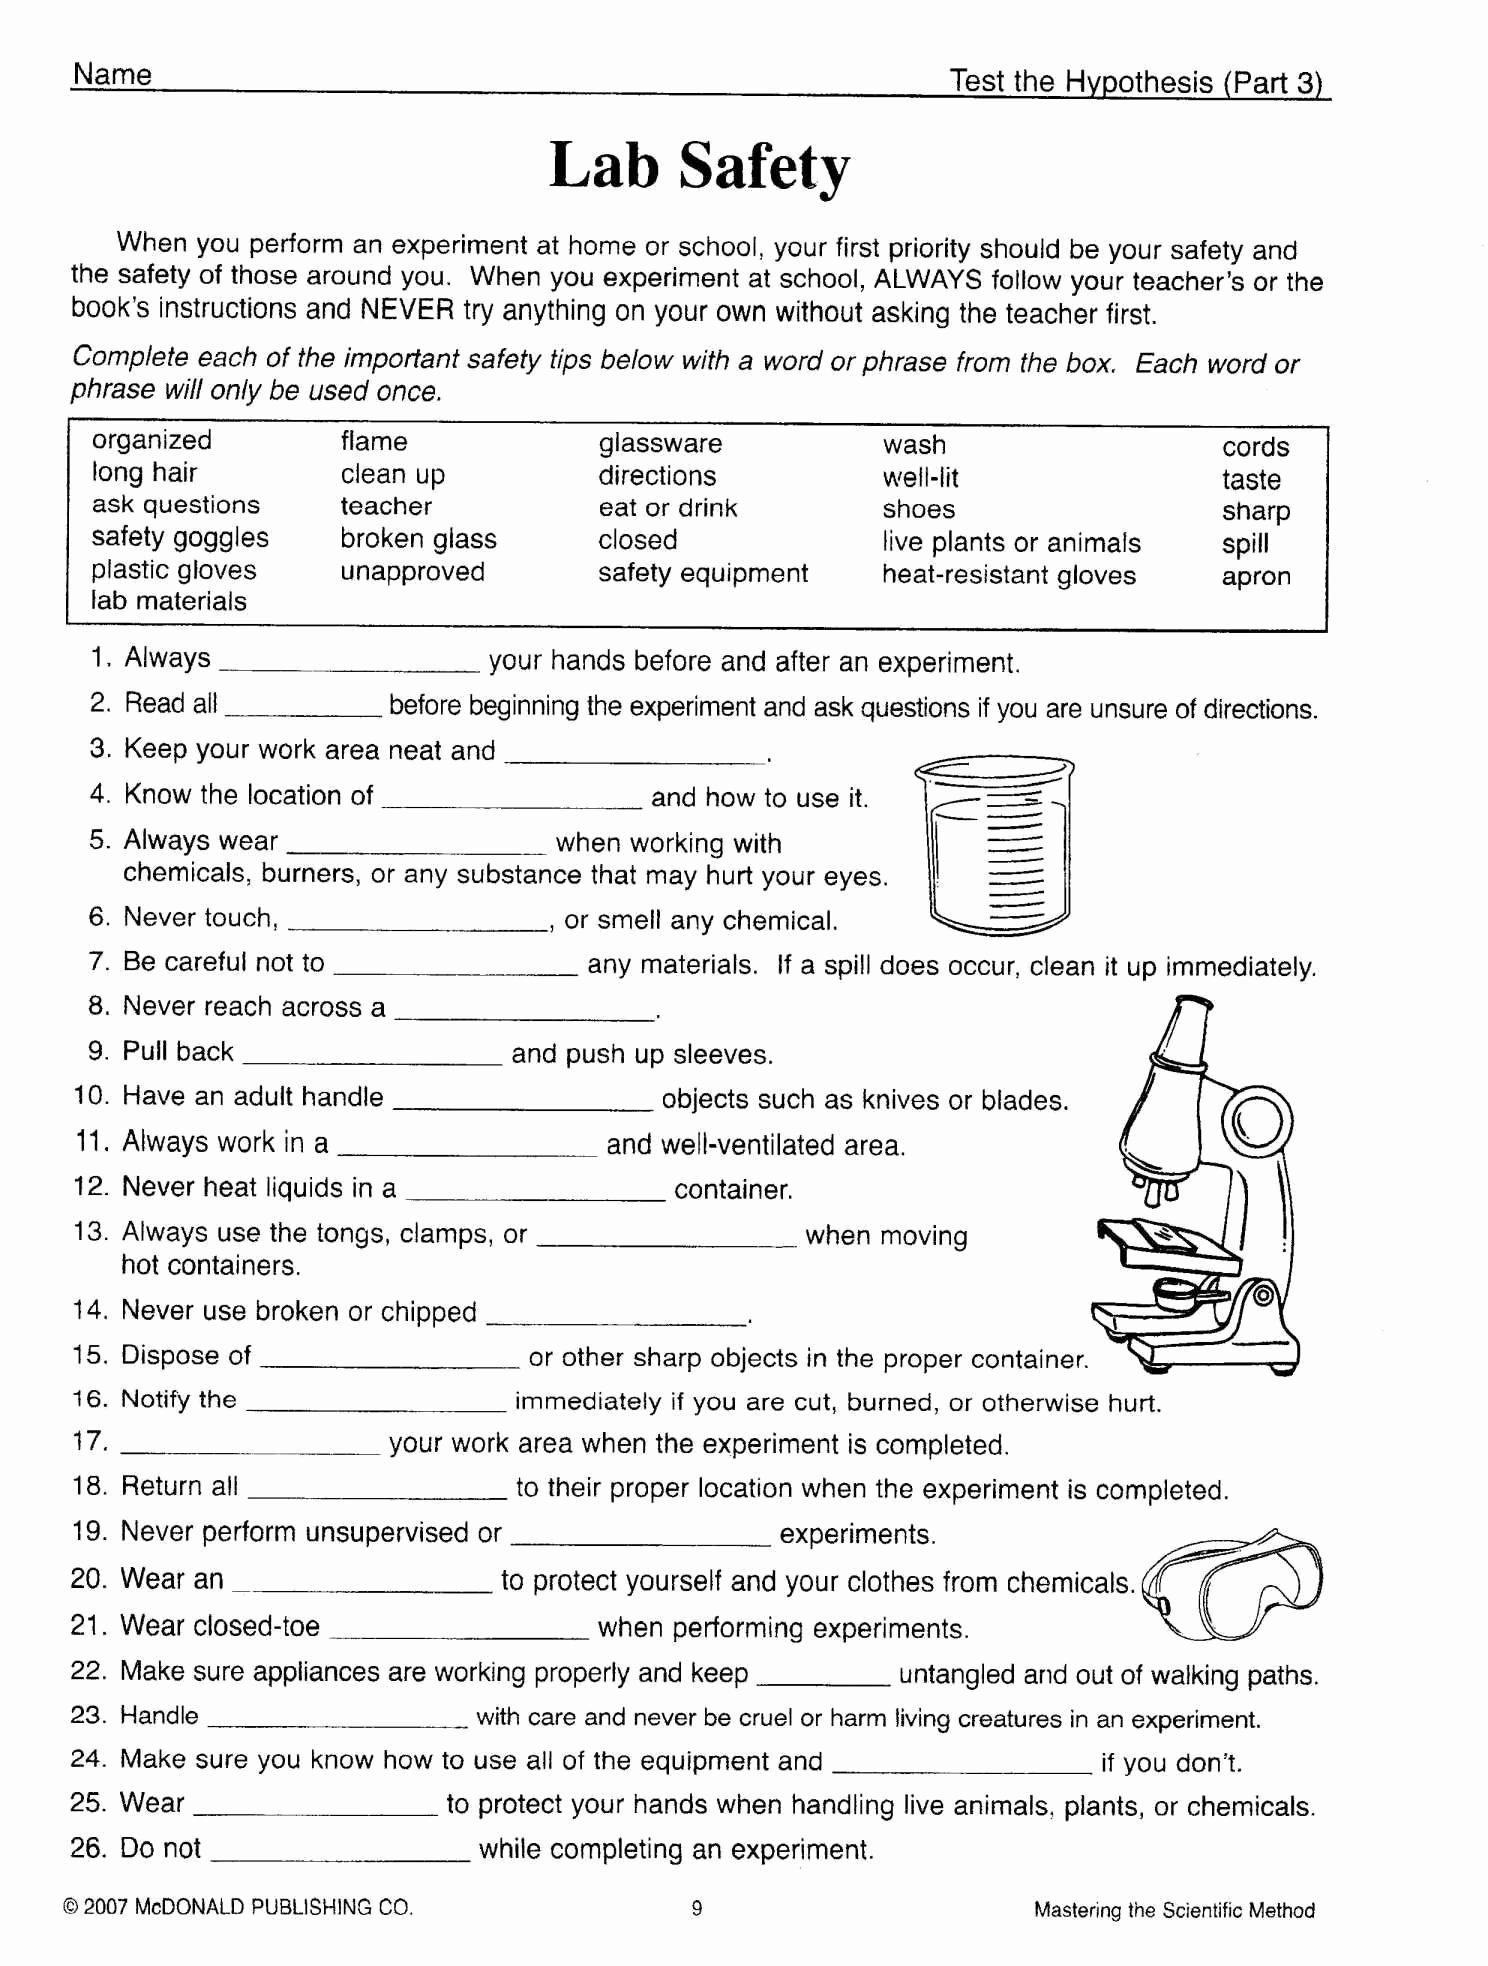 Lab Safety Worksheet Answers Fresh Lab Safety Symbols Worksheet Answer Key